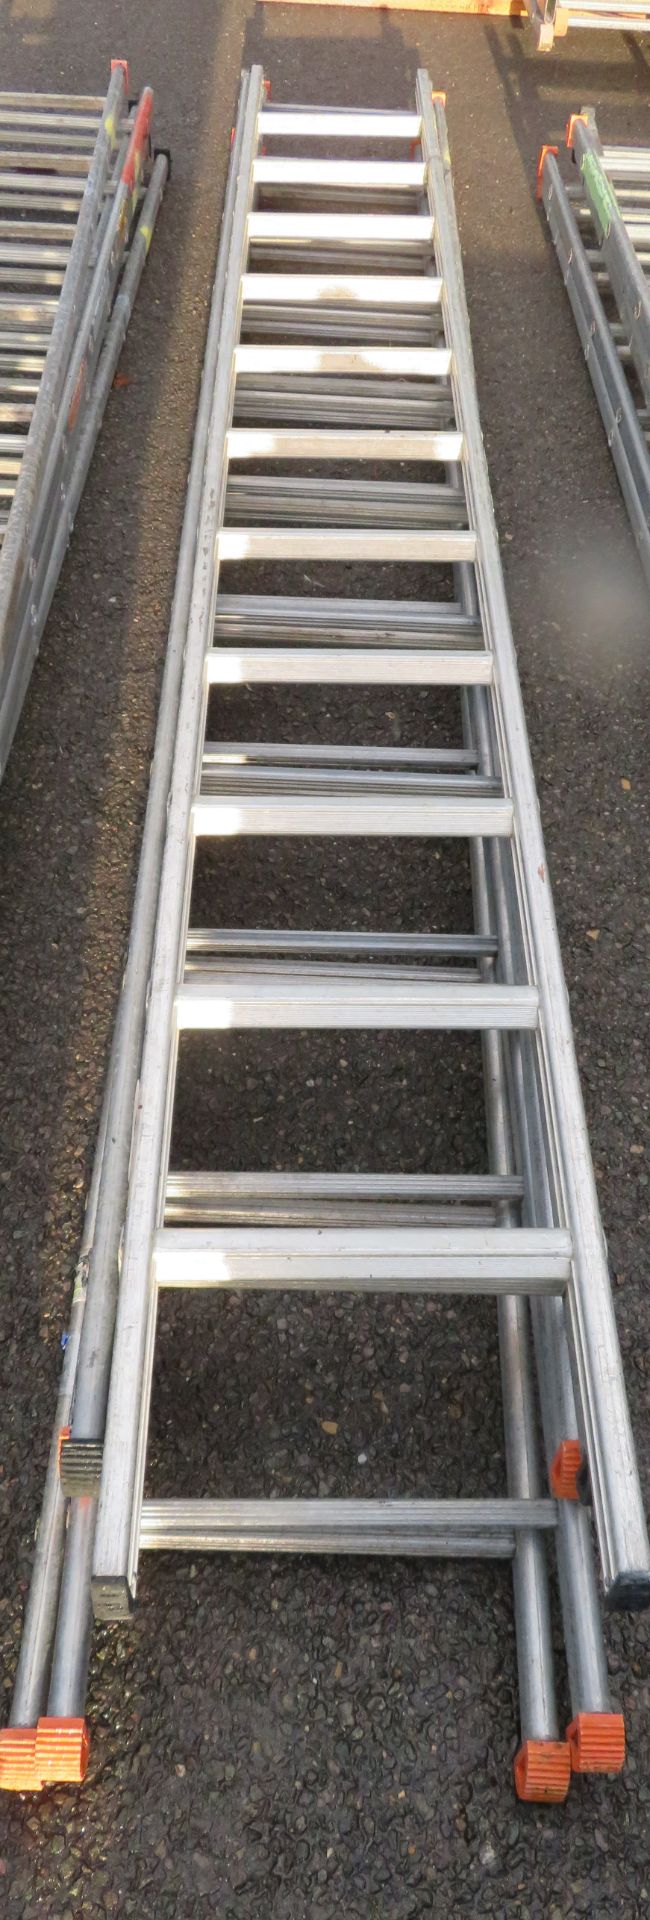 5x Aluminium 3m 10 Rung Scaffolding Ladder.